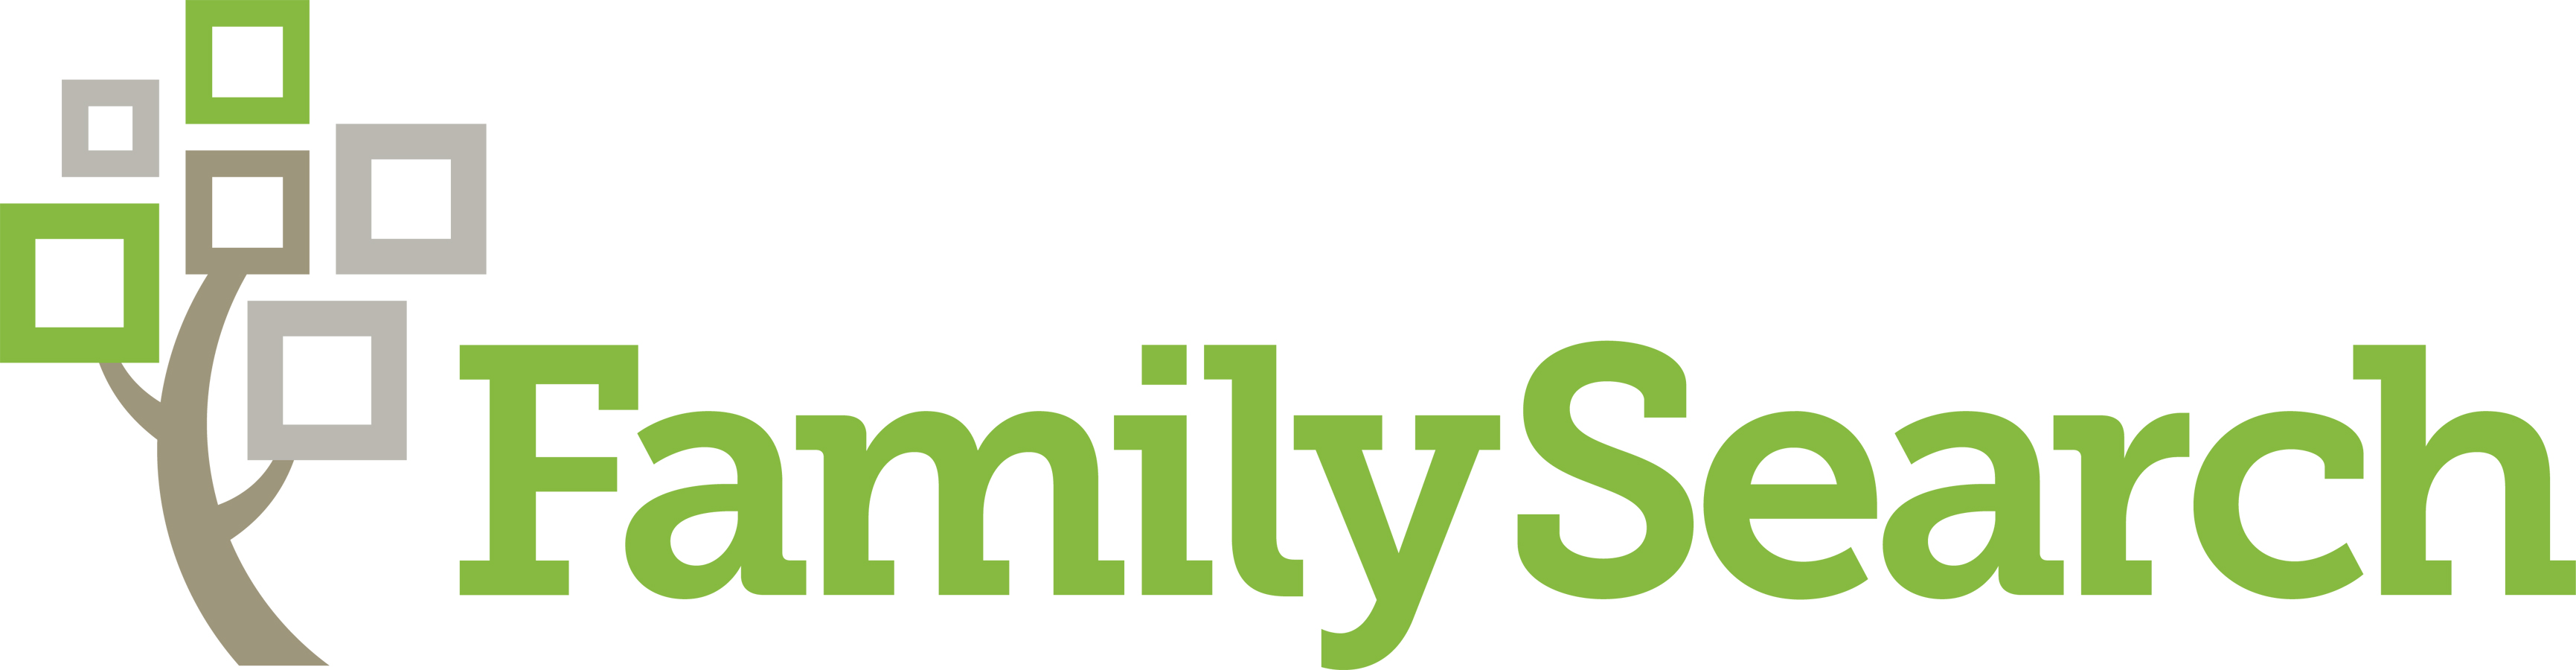 FamilySearch mosaic tree logo